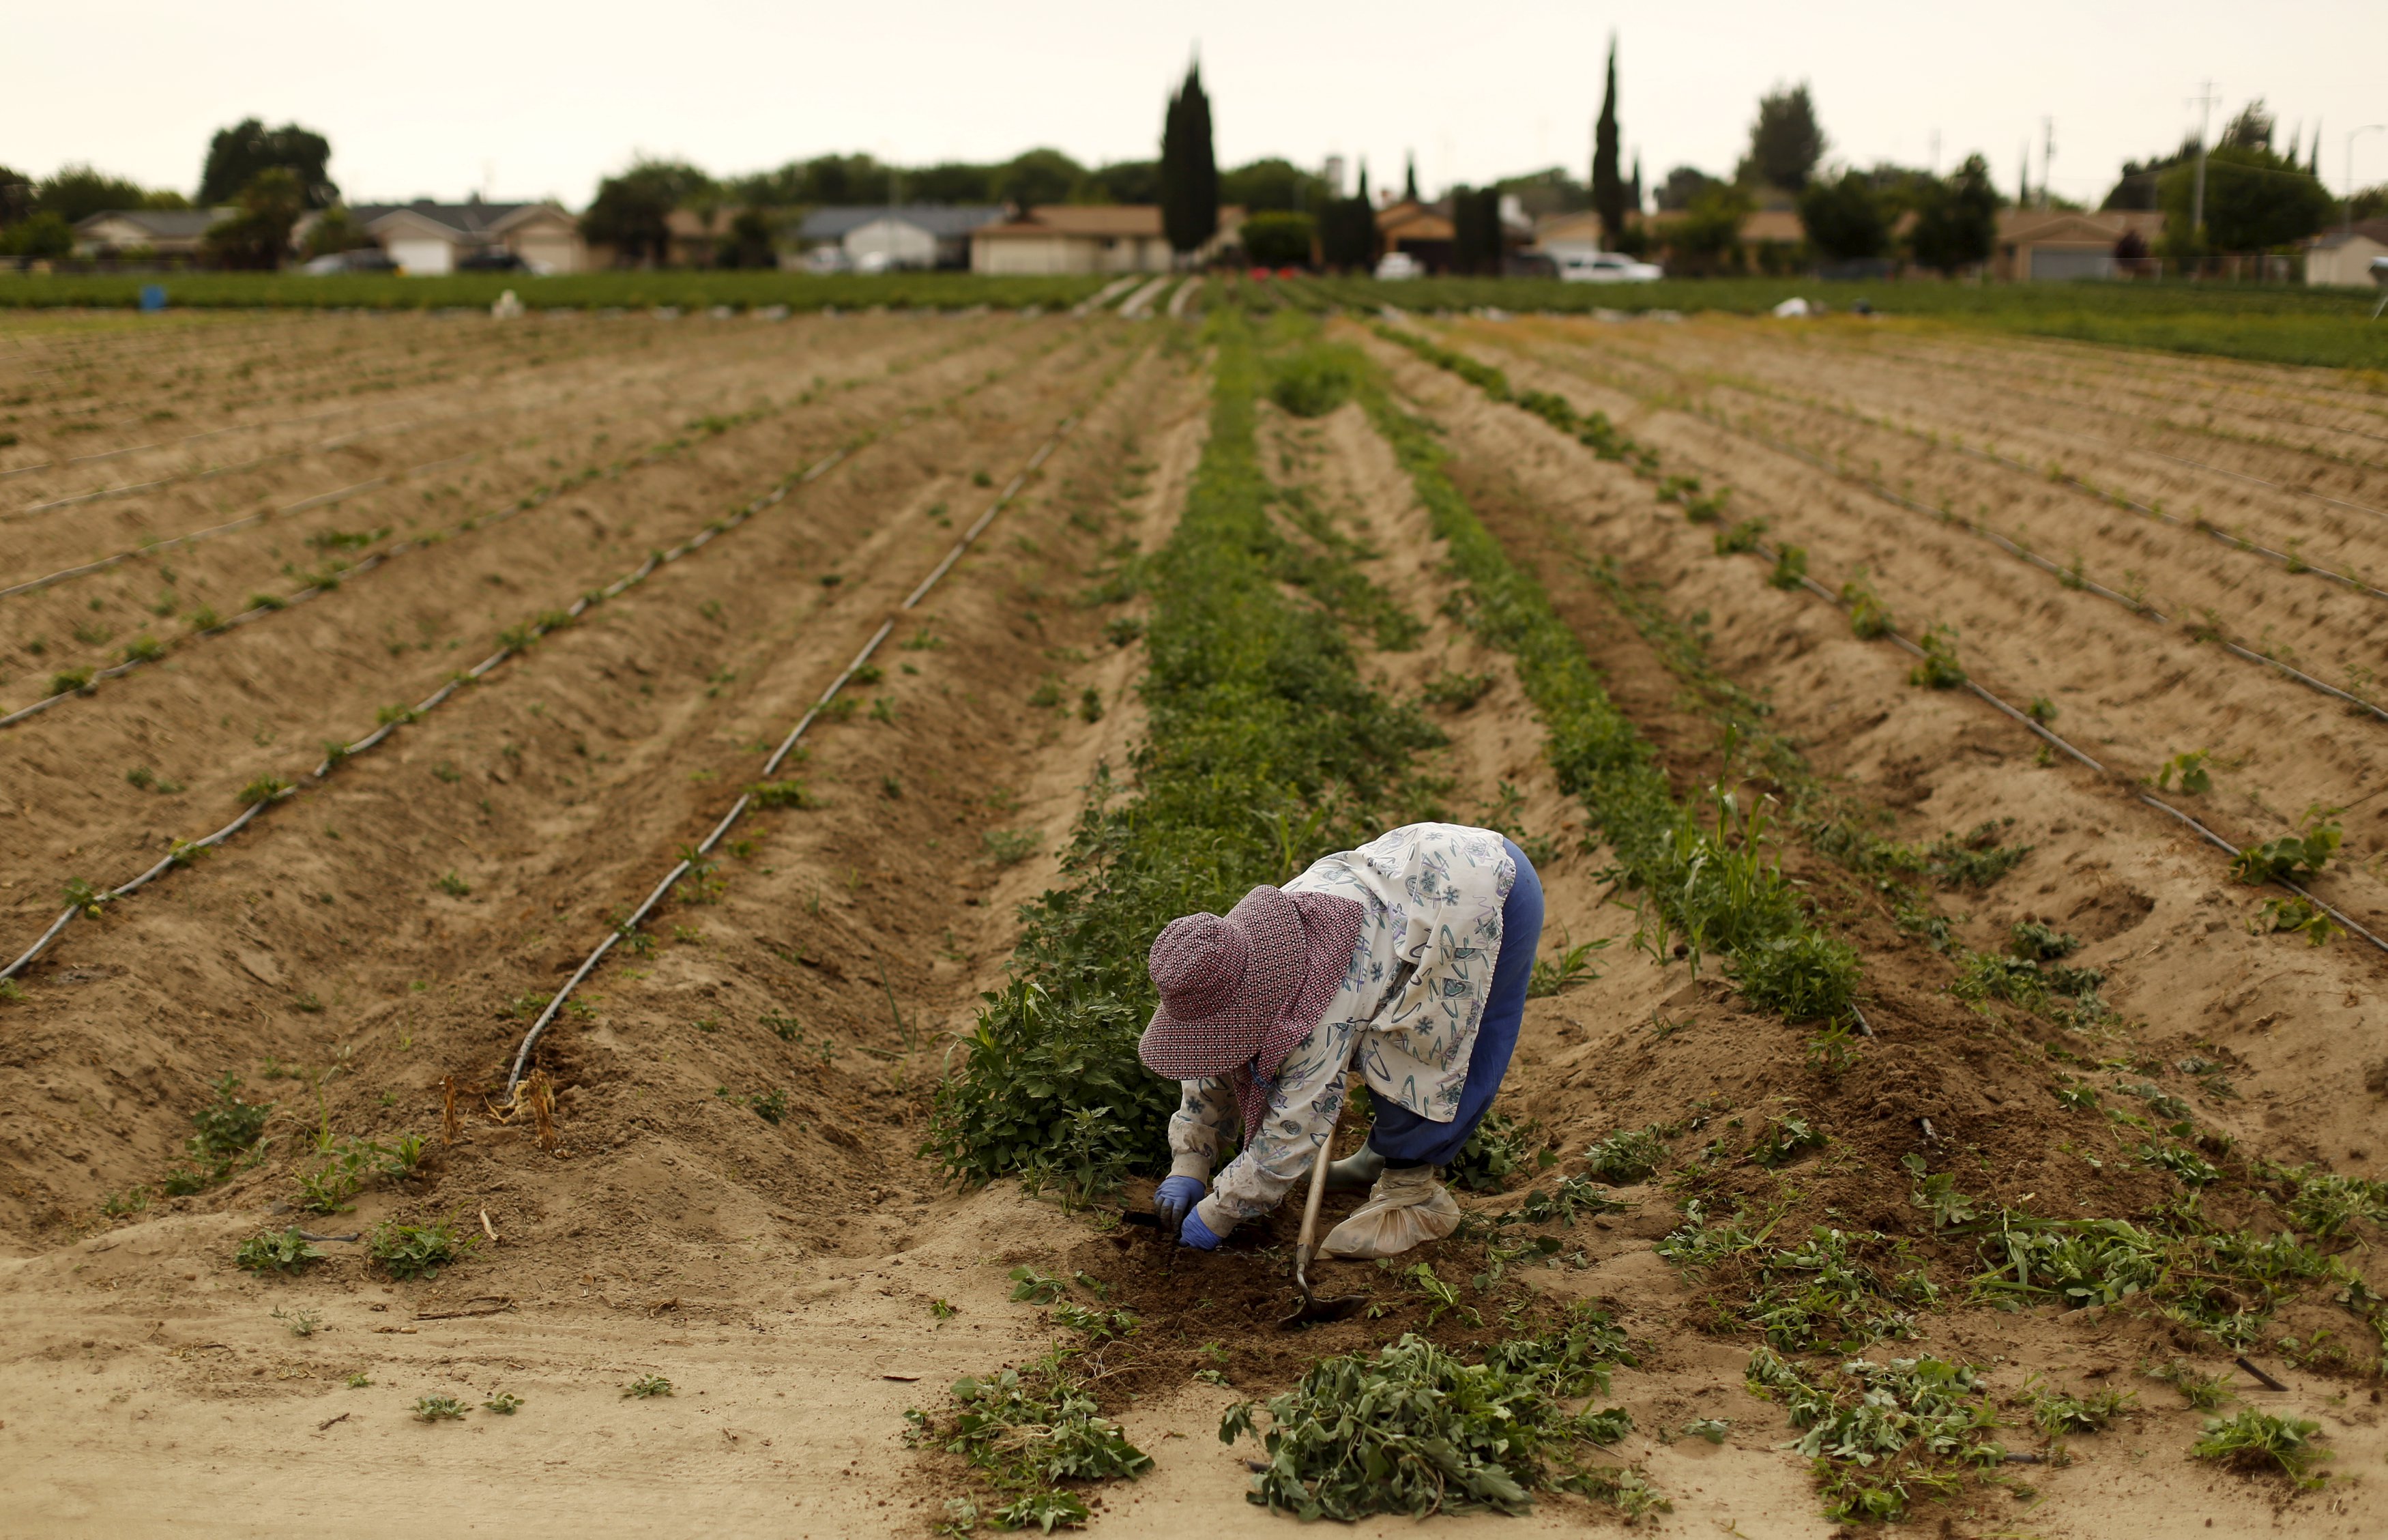 A worker tends to a farm field in Livingston, California.